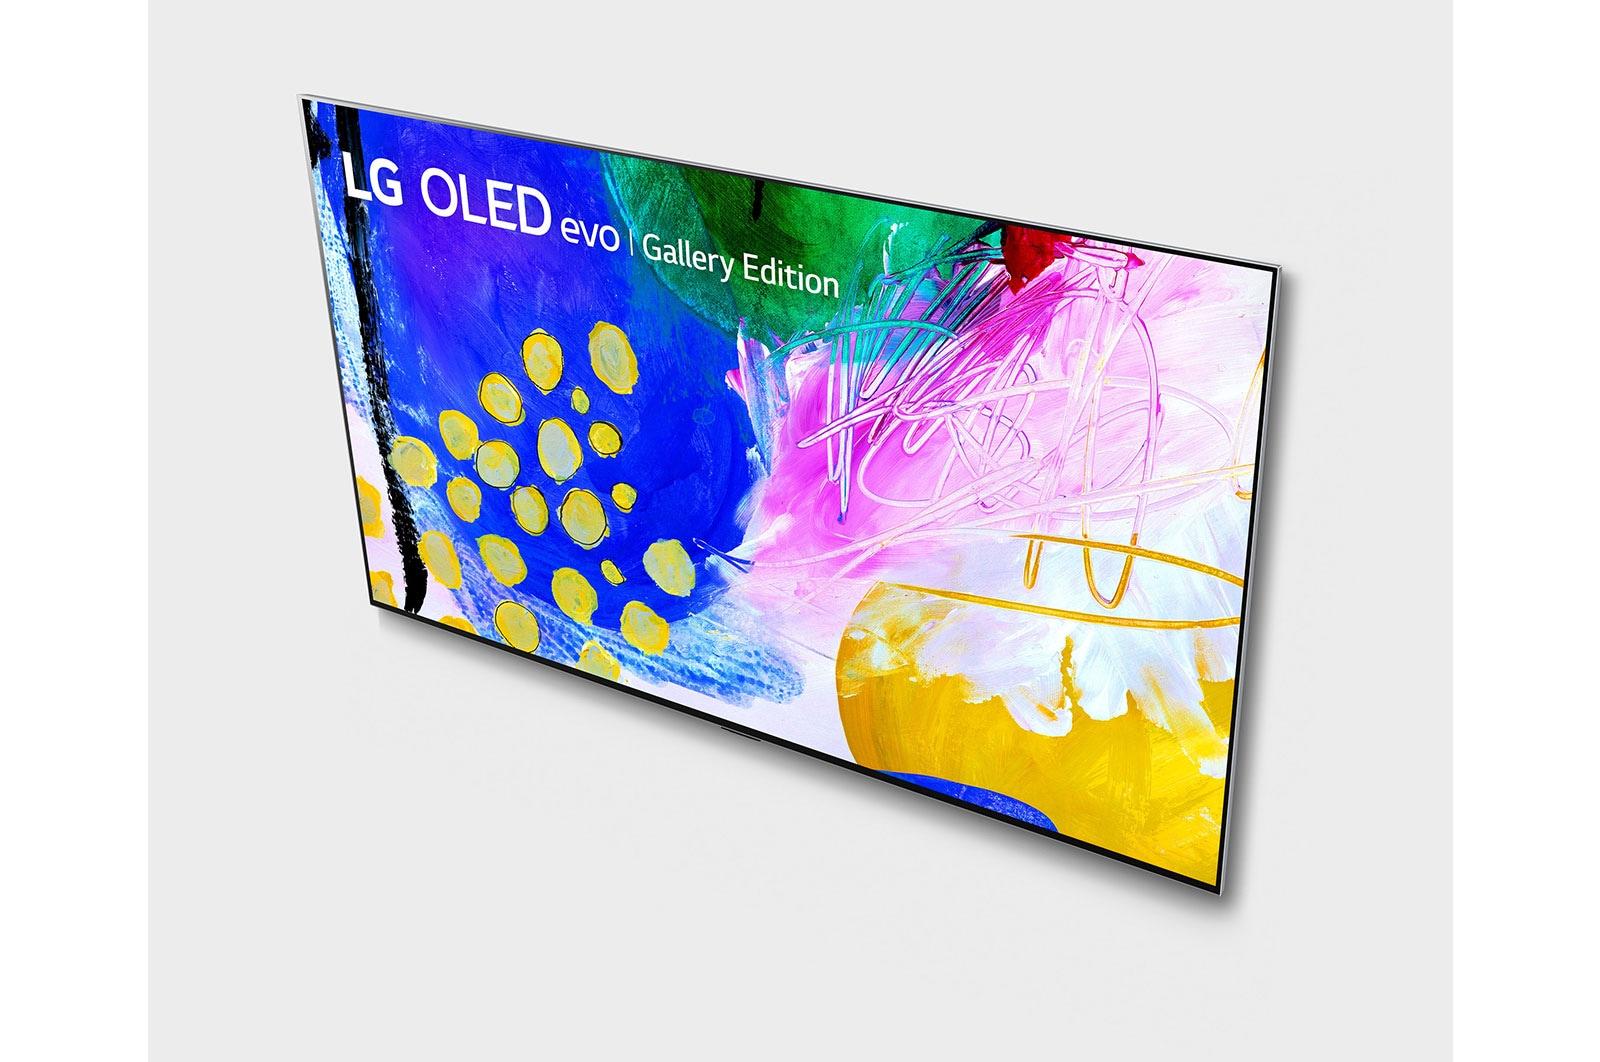 LG G2 83-inch OLED evo Gallery Edition TV